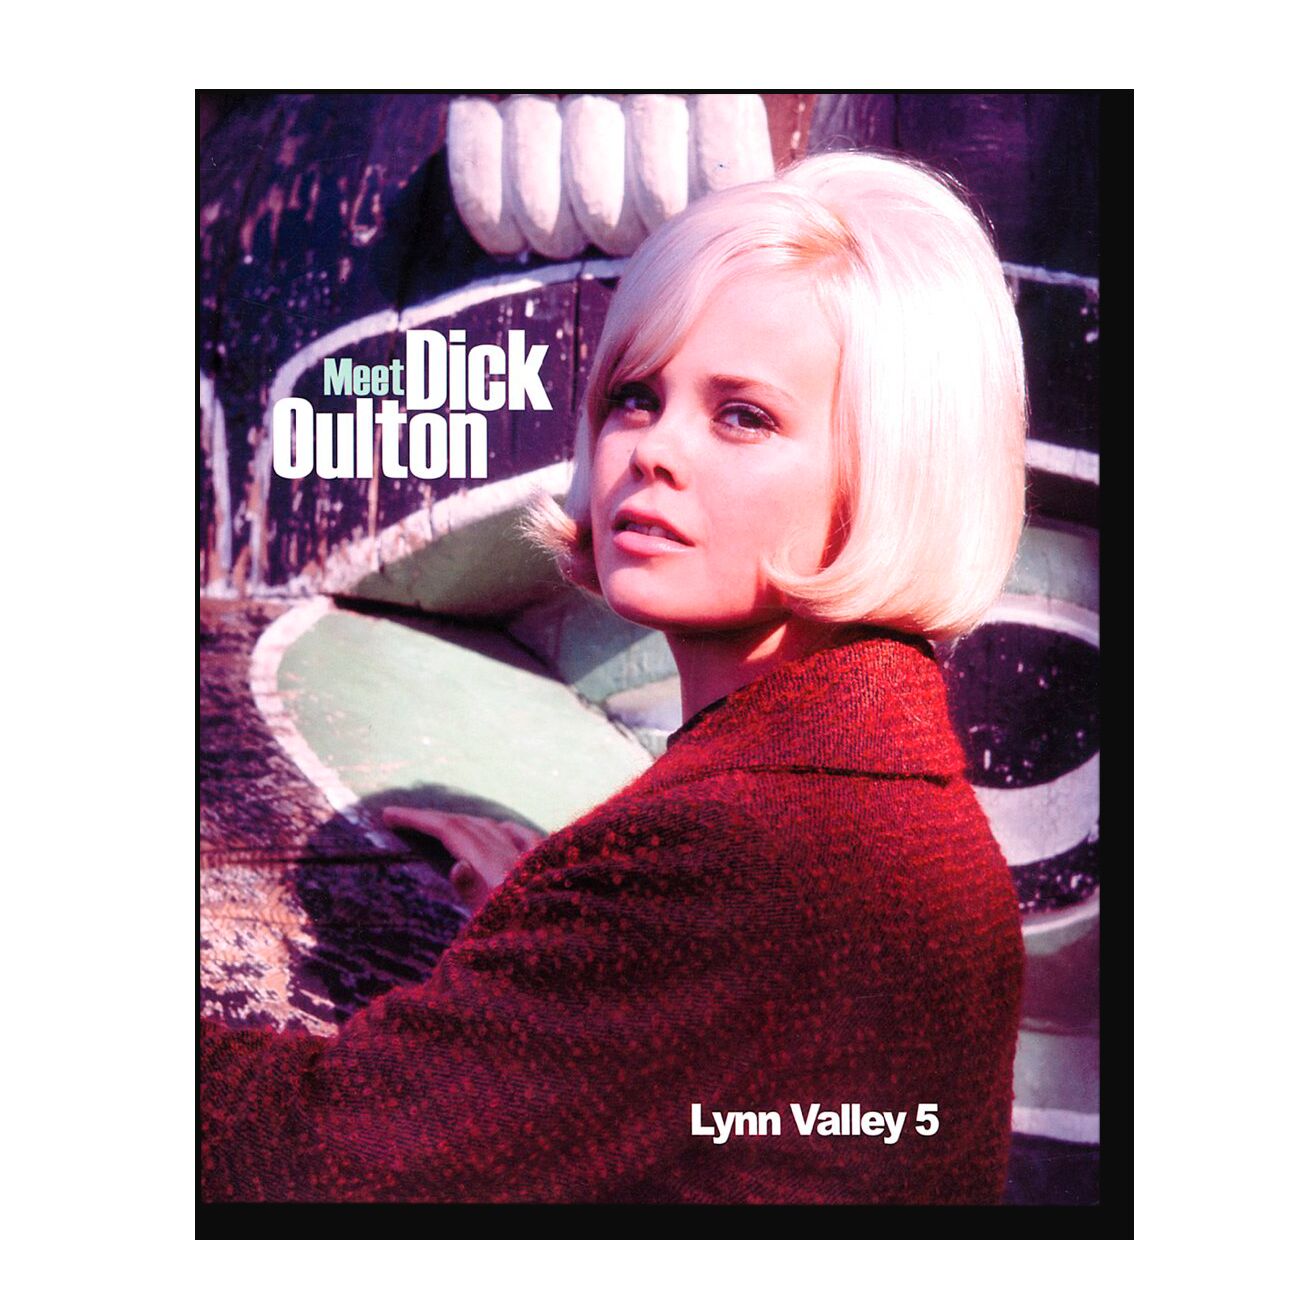 Meet Dick Oulton: Lynn Valley 5 